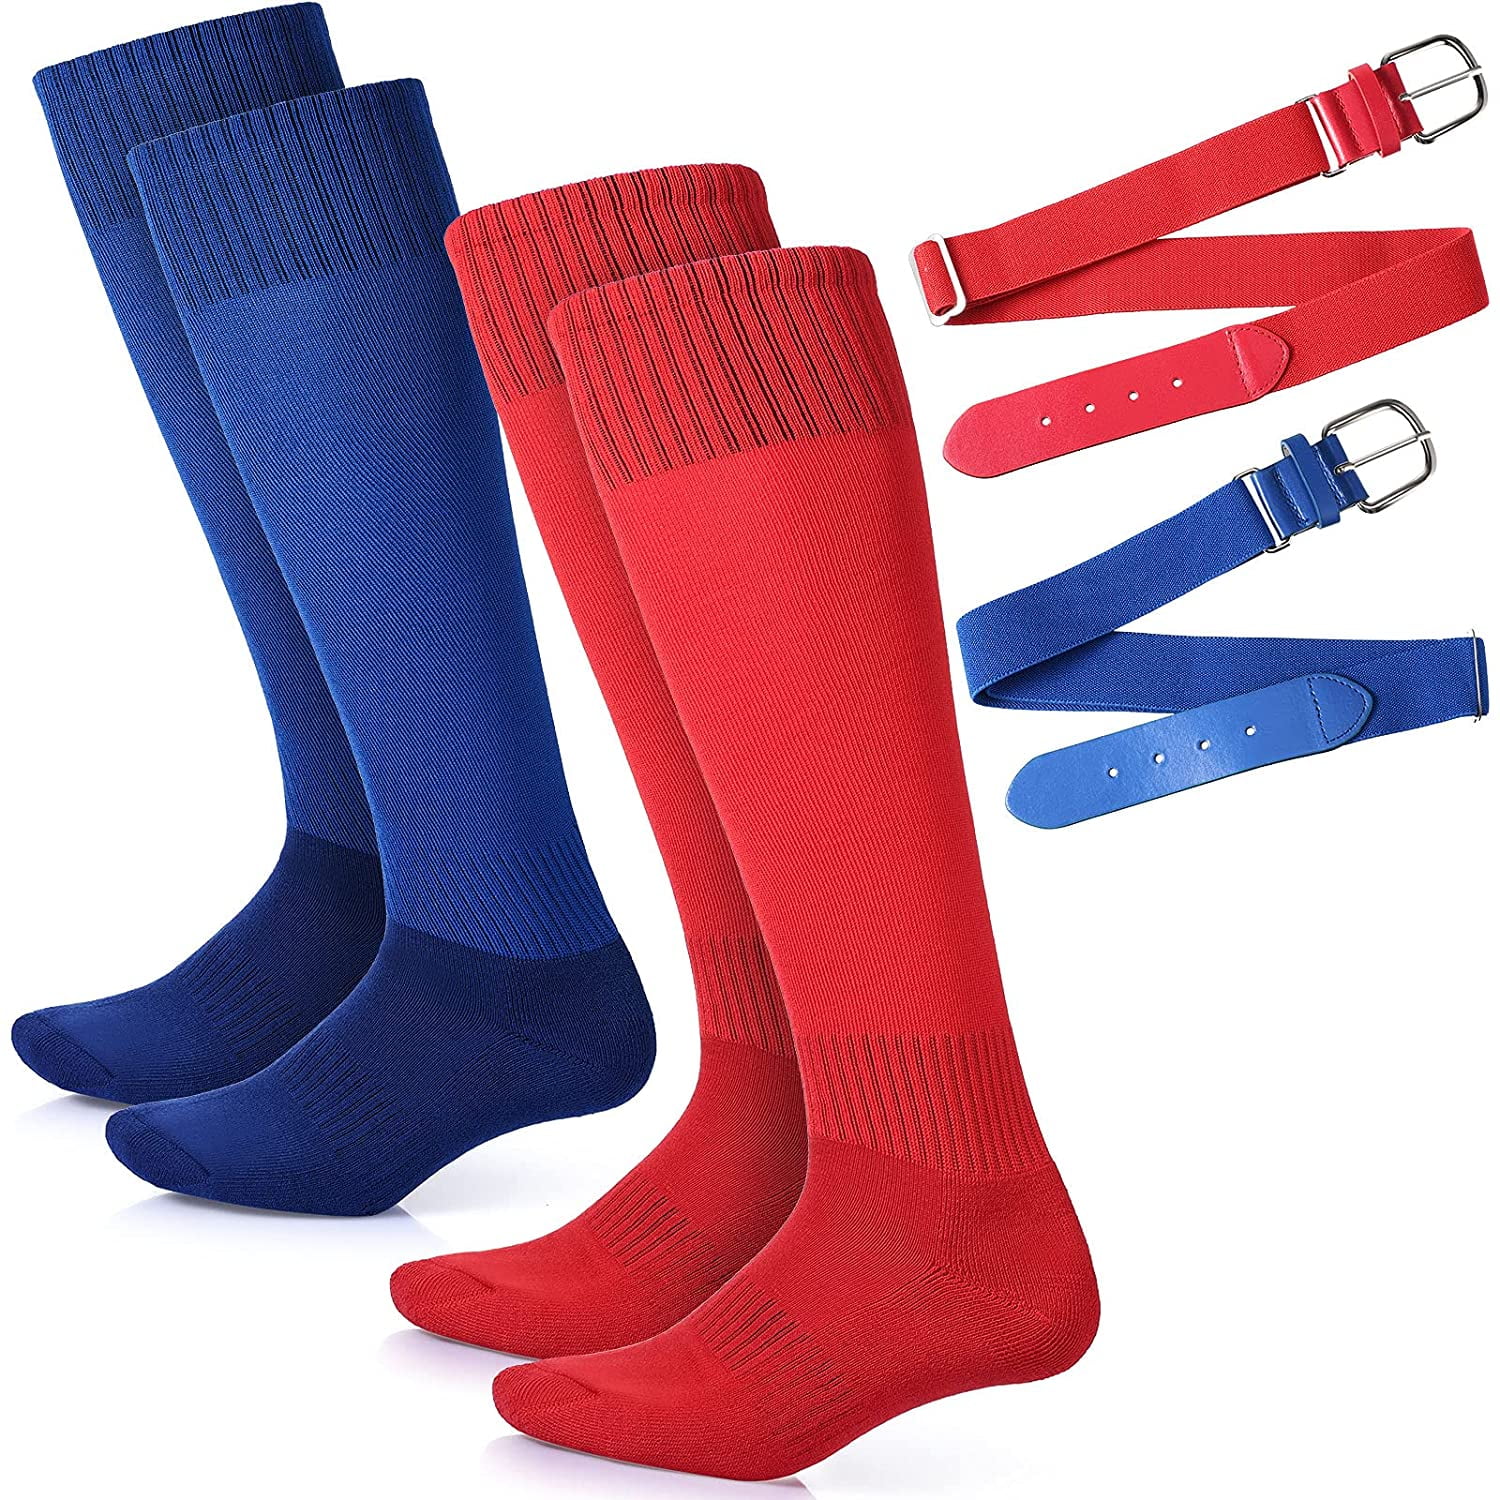 Youth & Adult Sizes Youper Compression Softball Socks & Belt Combo Set 2 Pairs of Socks Over the Calf & 1 Belt 